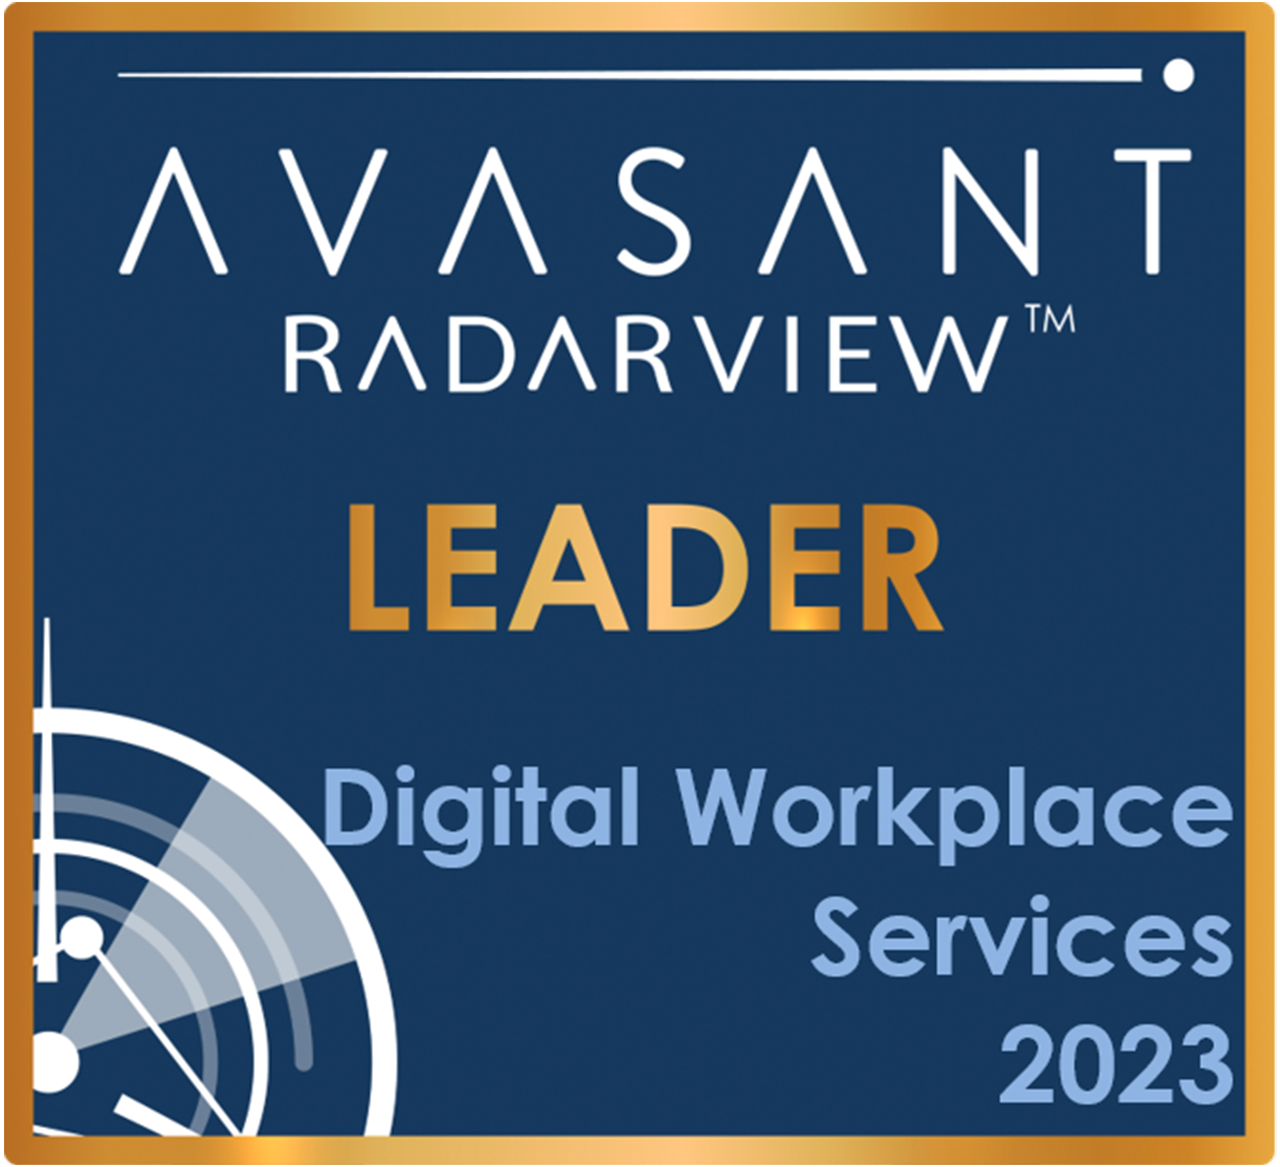 Avasant DWS 2023 radarview square badge